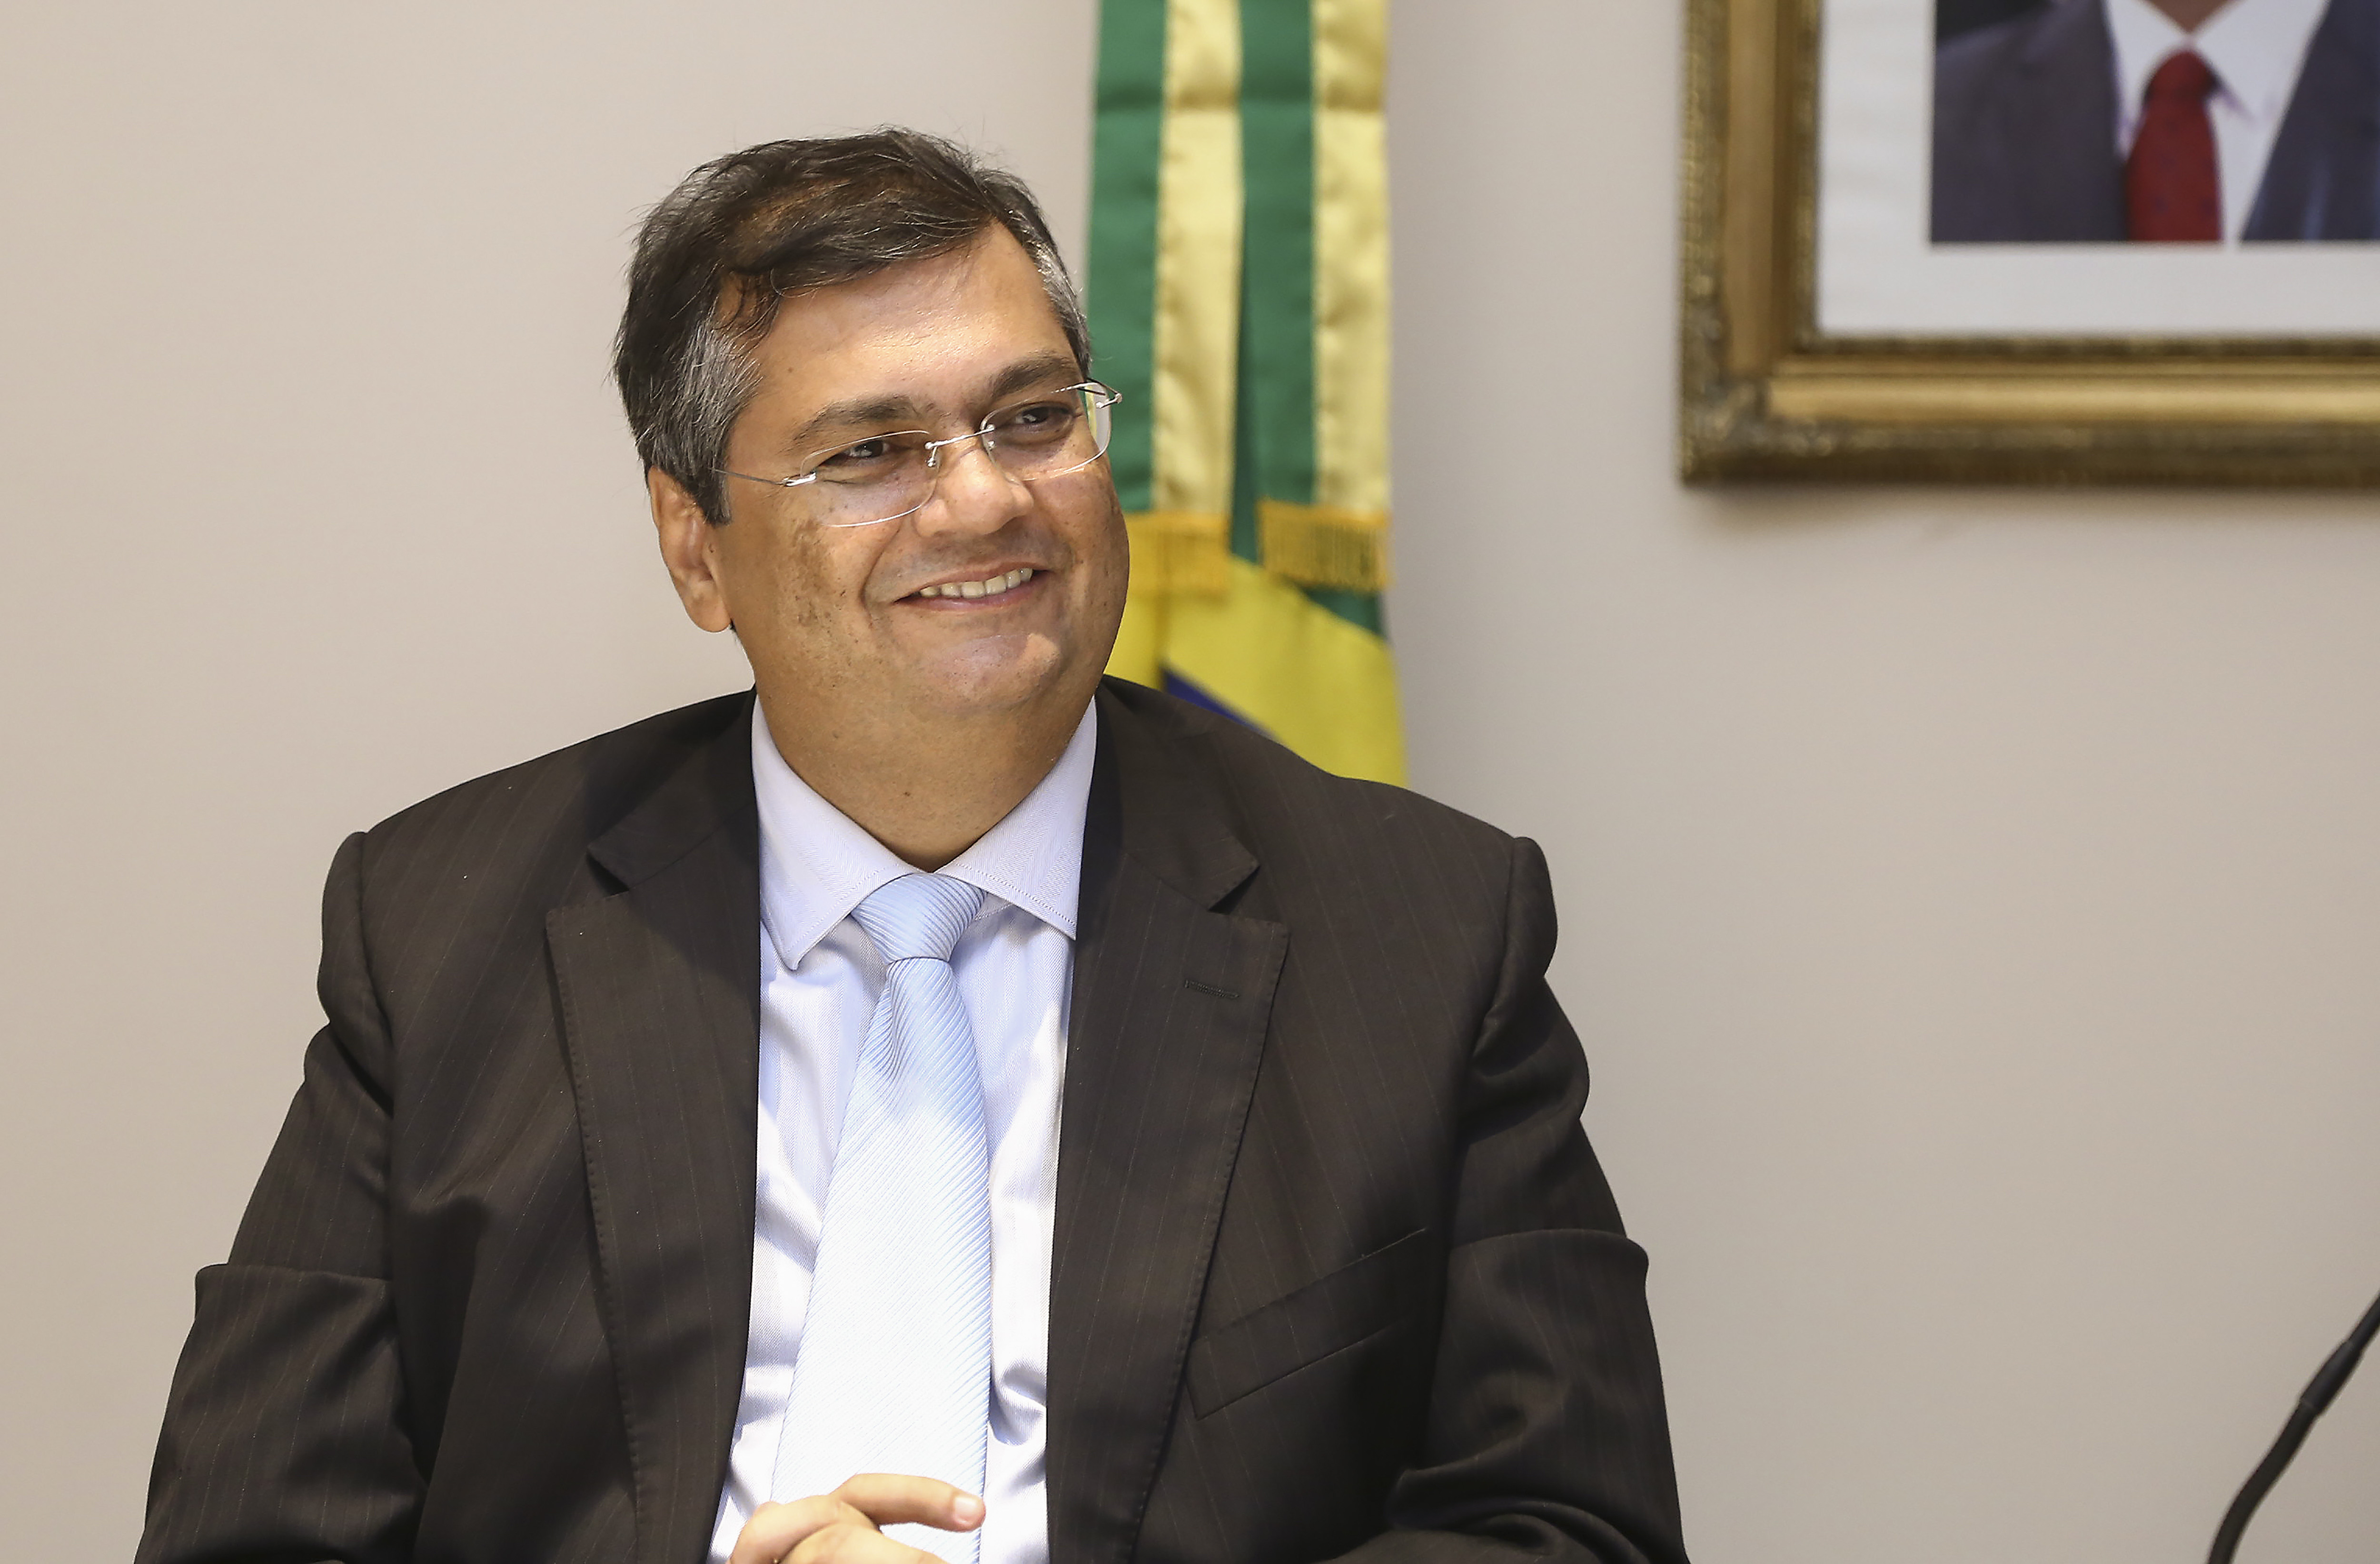 Entrega de título de cidadão piauiense ao Governador Flávio Dino é adiada.